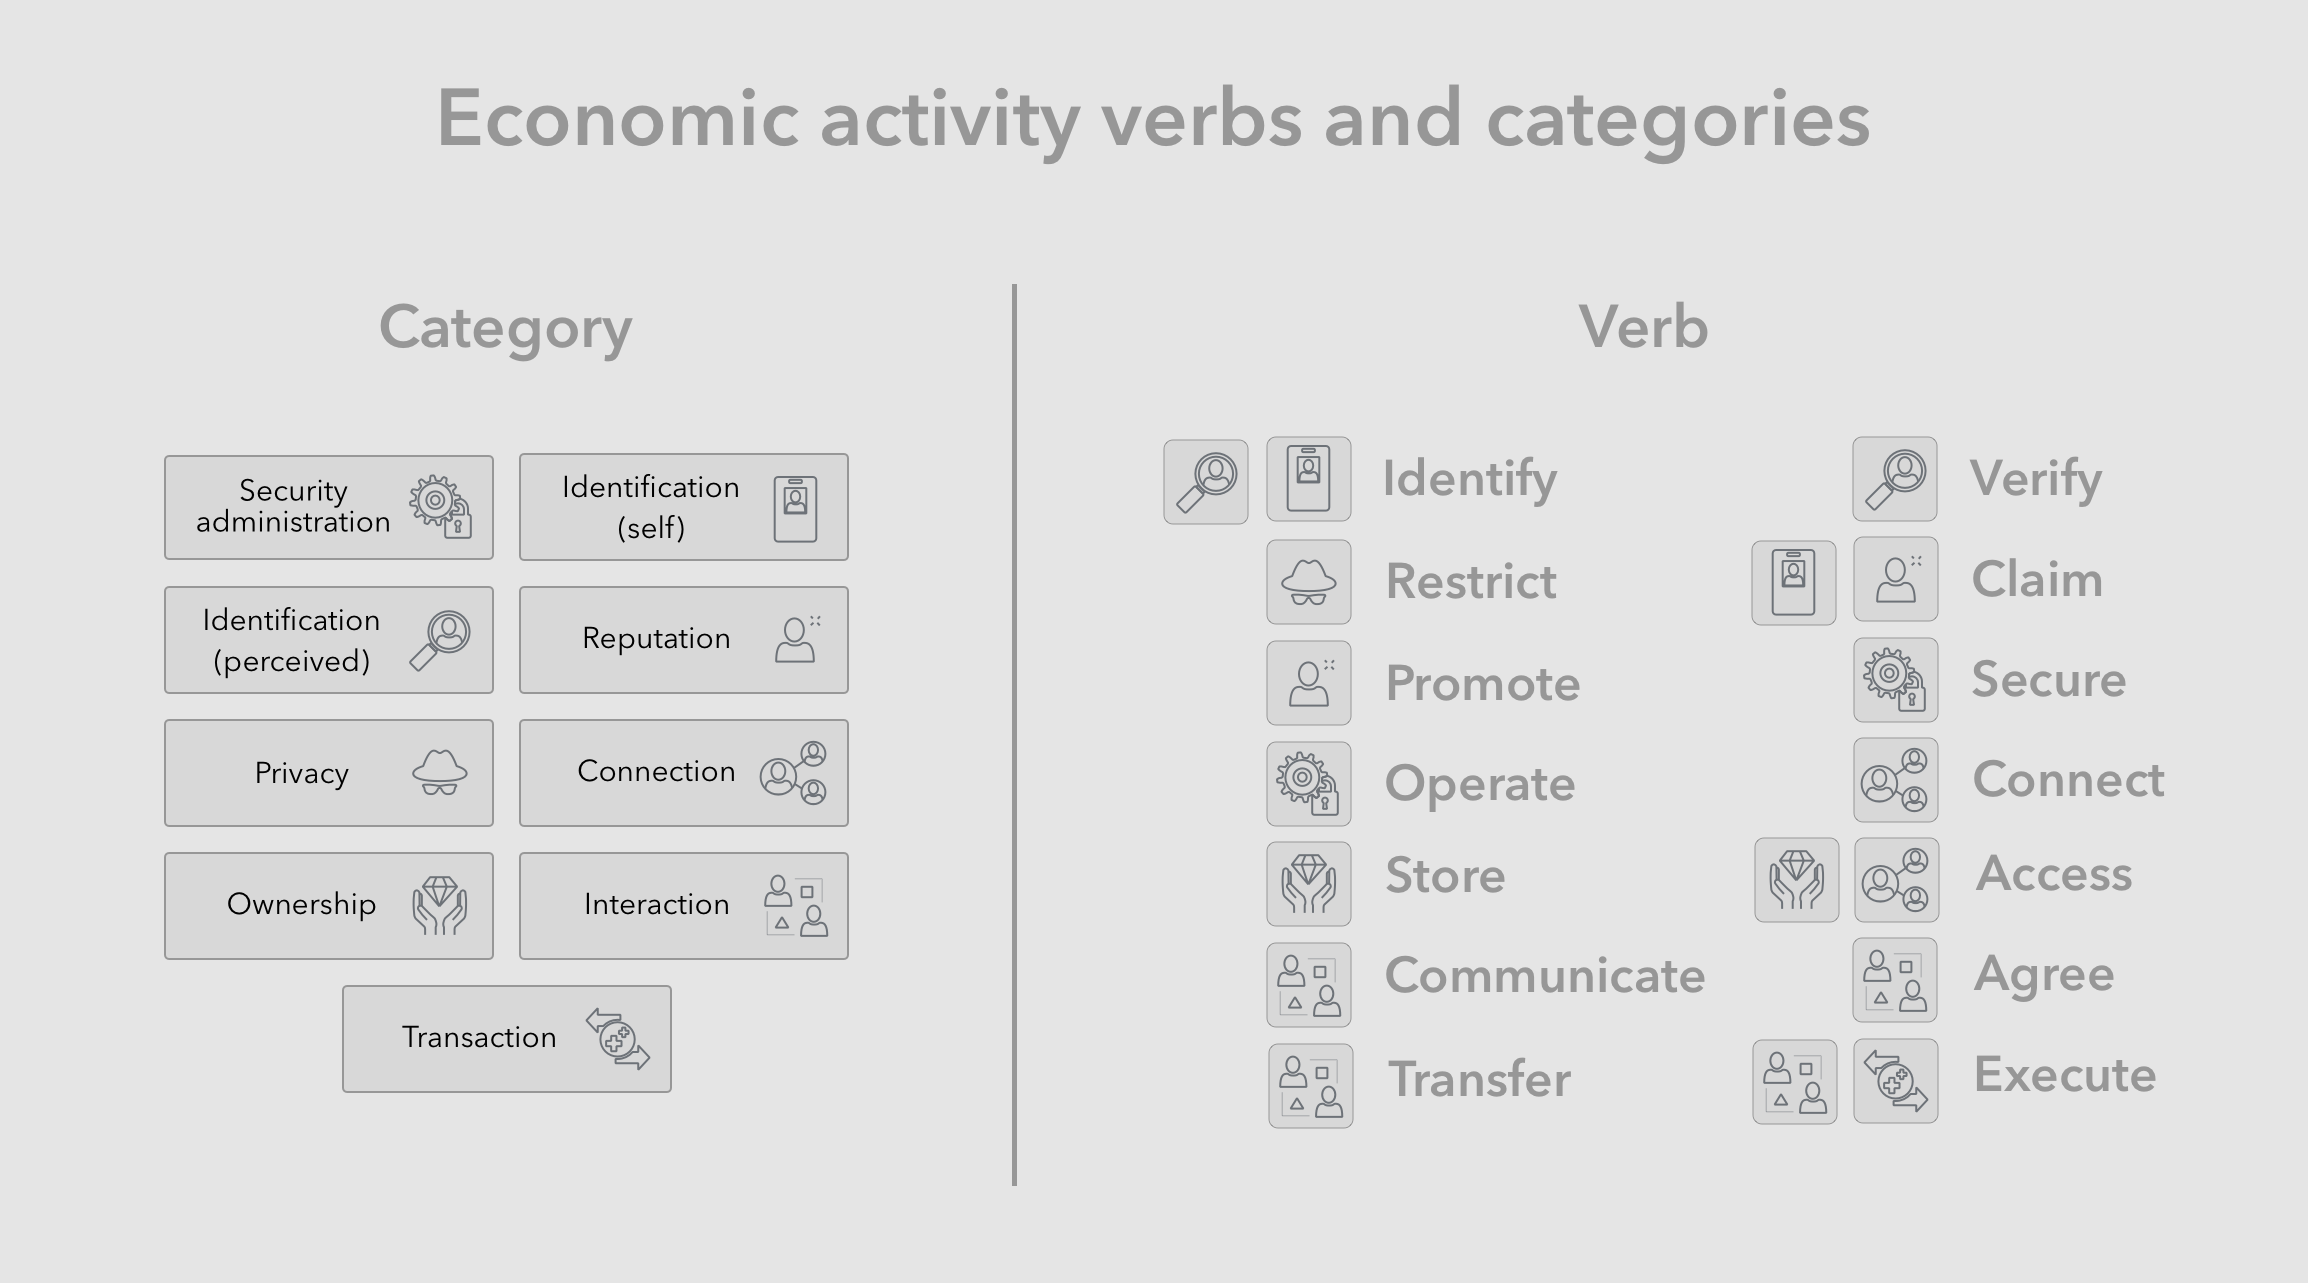 Economic activity verbs and categories